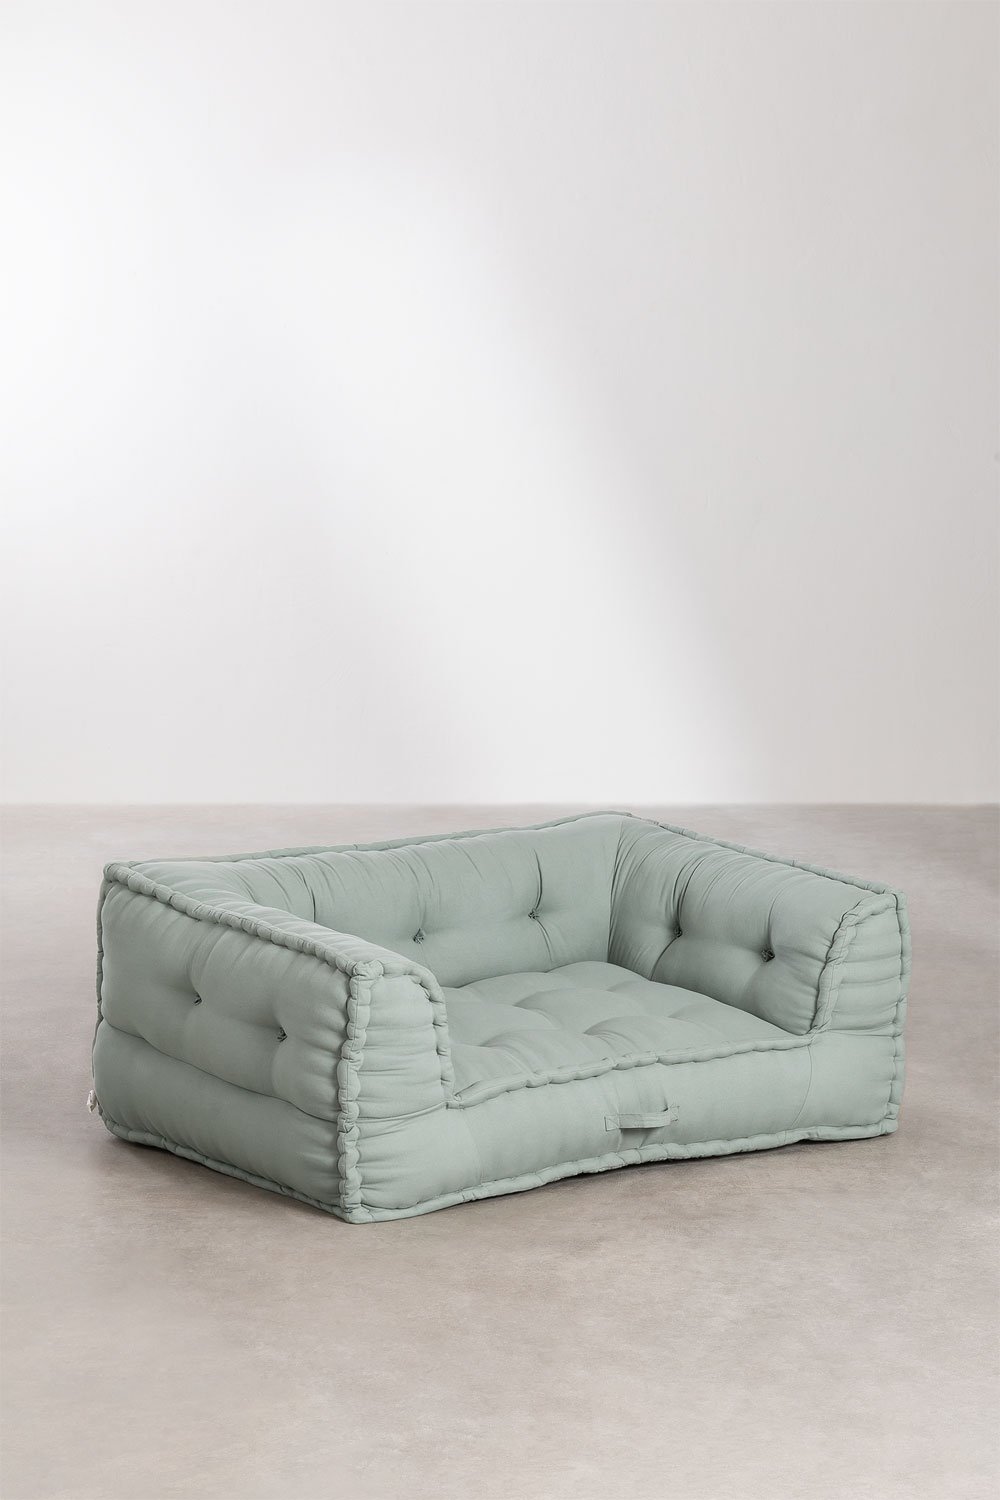 Cuscino per divano modulare in cotone Yebel - SKLUM